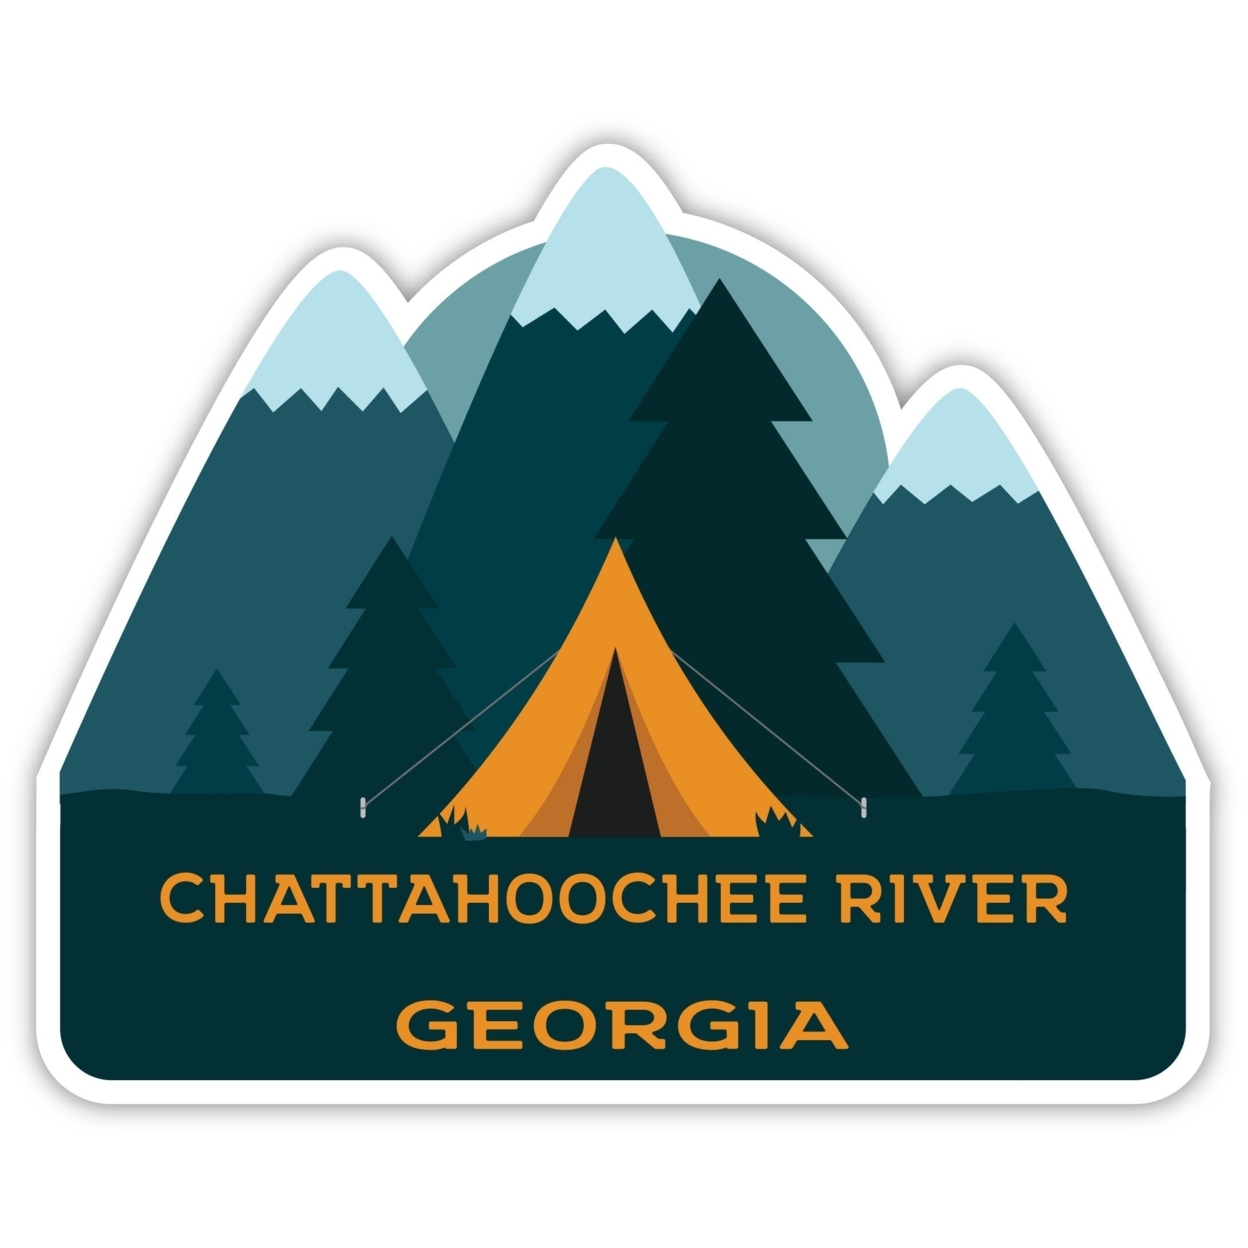 Chattahoochee River Georgia Souvenir Decorative Stickers (Choose Theme And Size) - Single Unit, 2-Inch, Tent